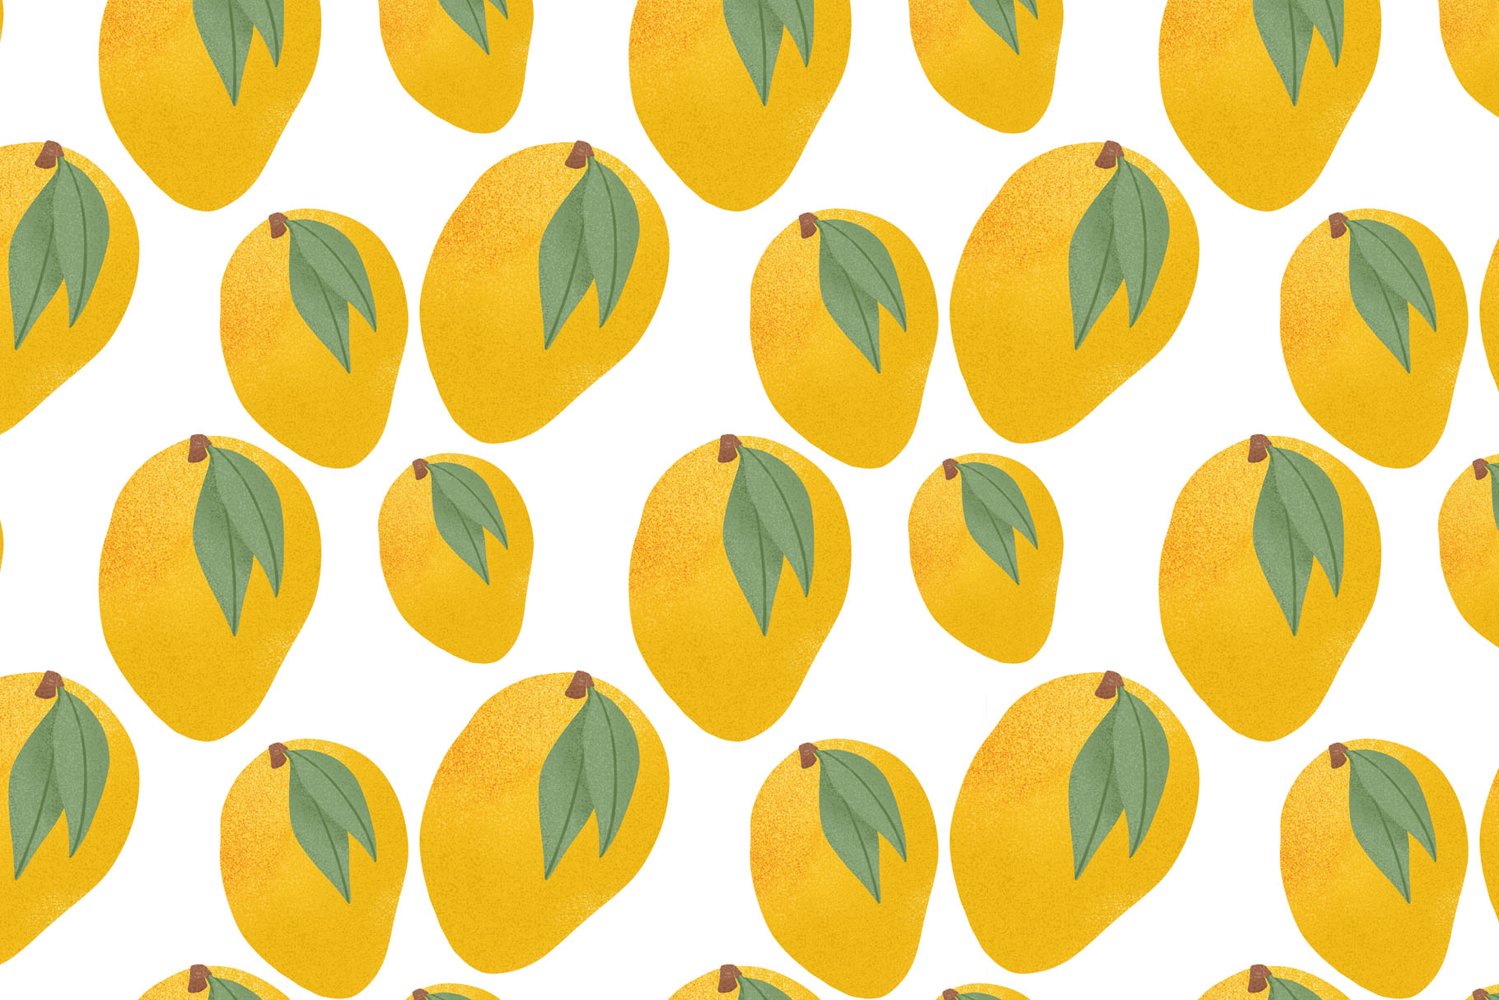 Mango illustrations.